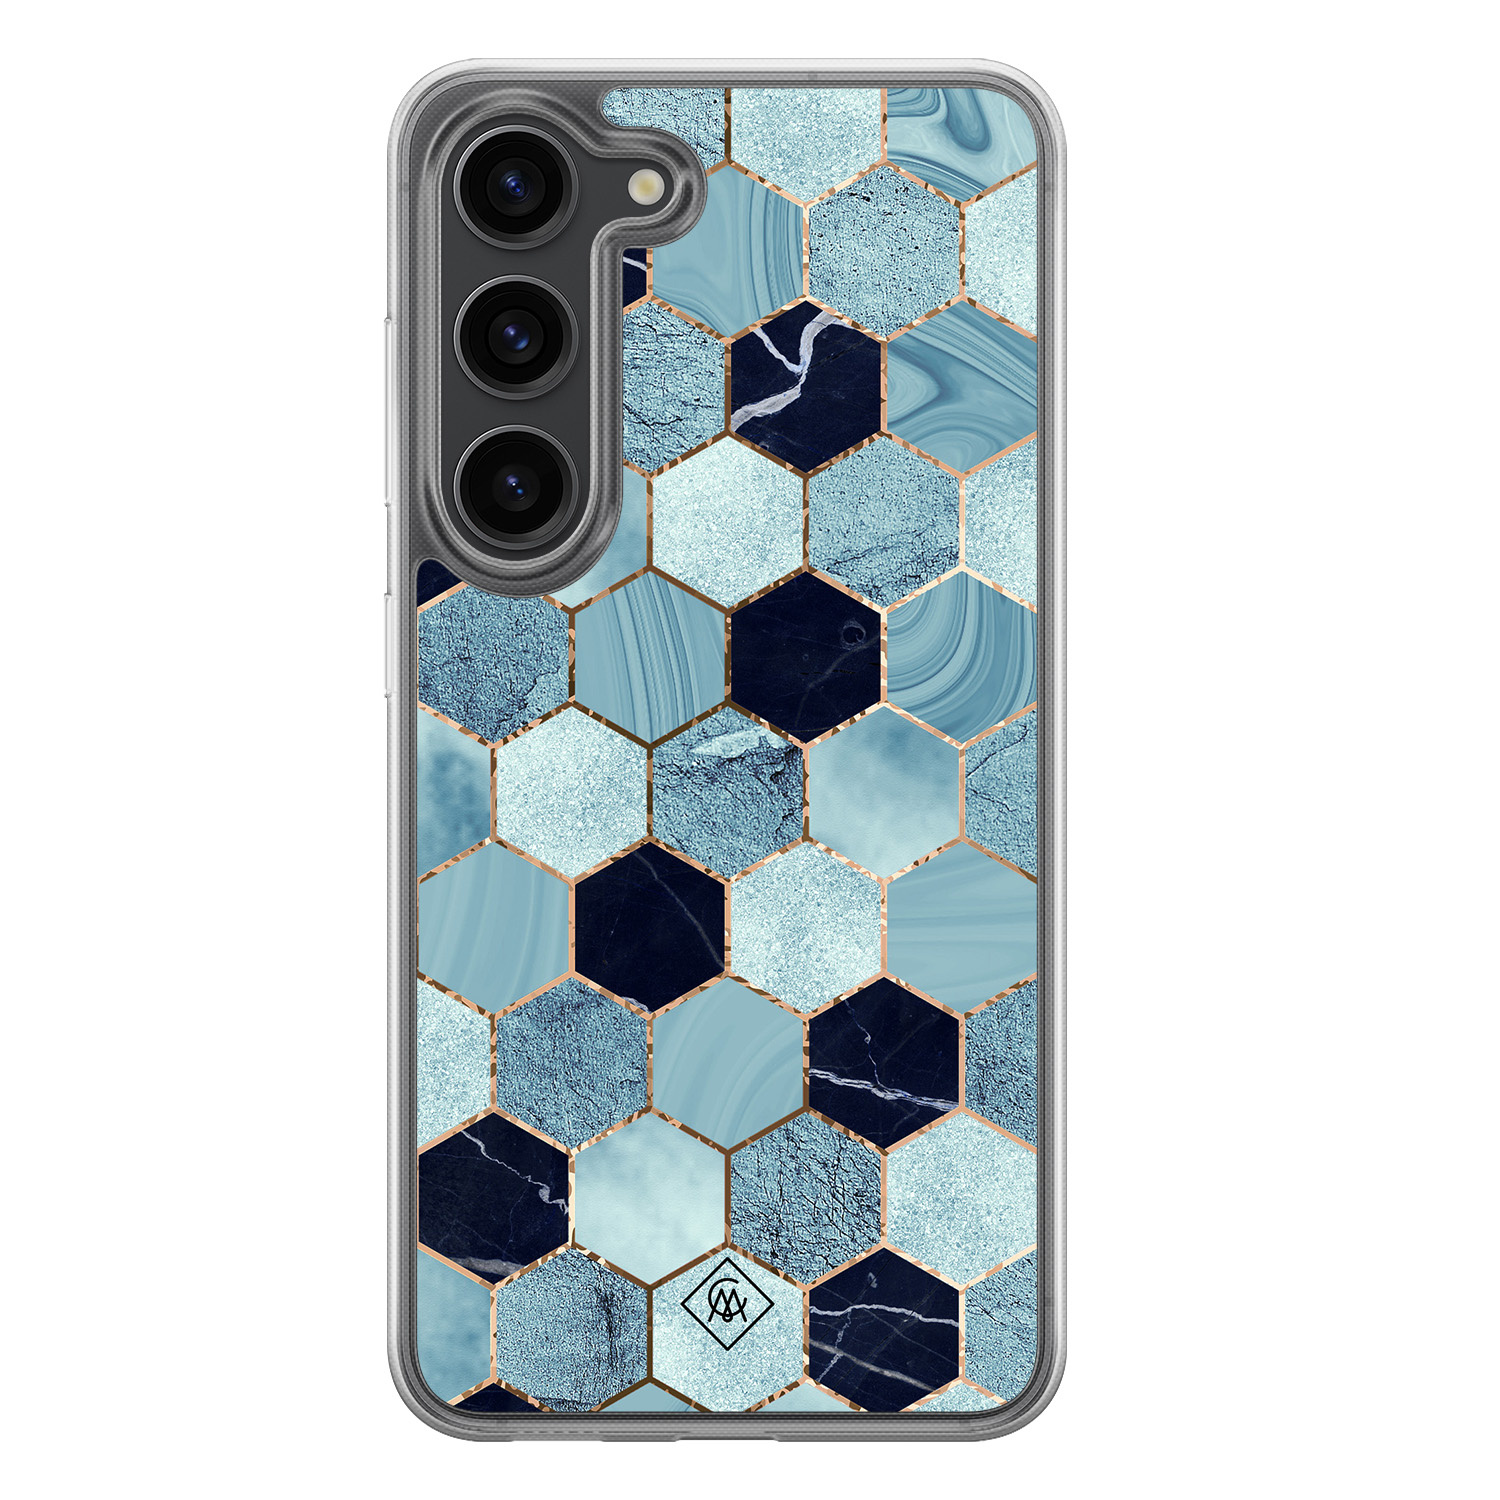 Samsung Galaxy S23 Plus hoesje siliconen - Blue cubes - Casimoda® 2-in-1 case hybride - Schokbestendig - Marble design - Verhoogde randen - Blauw, Transparant